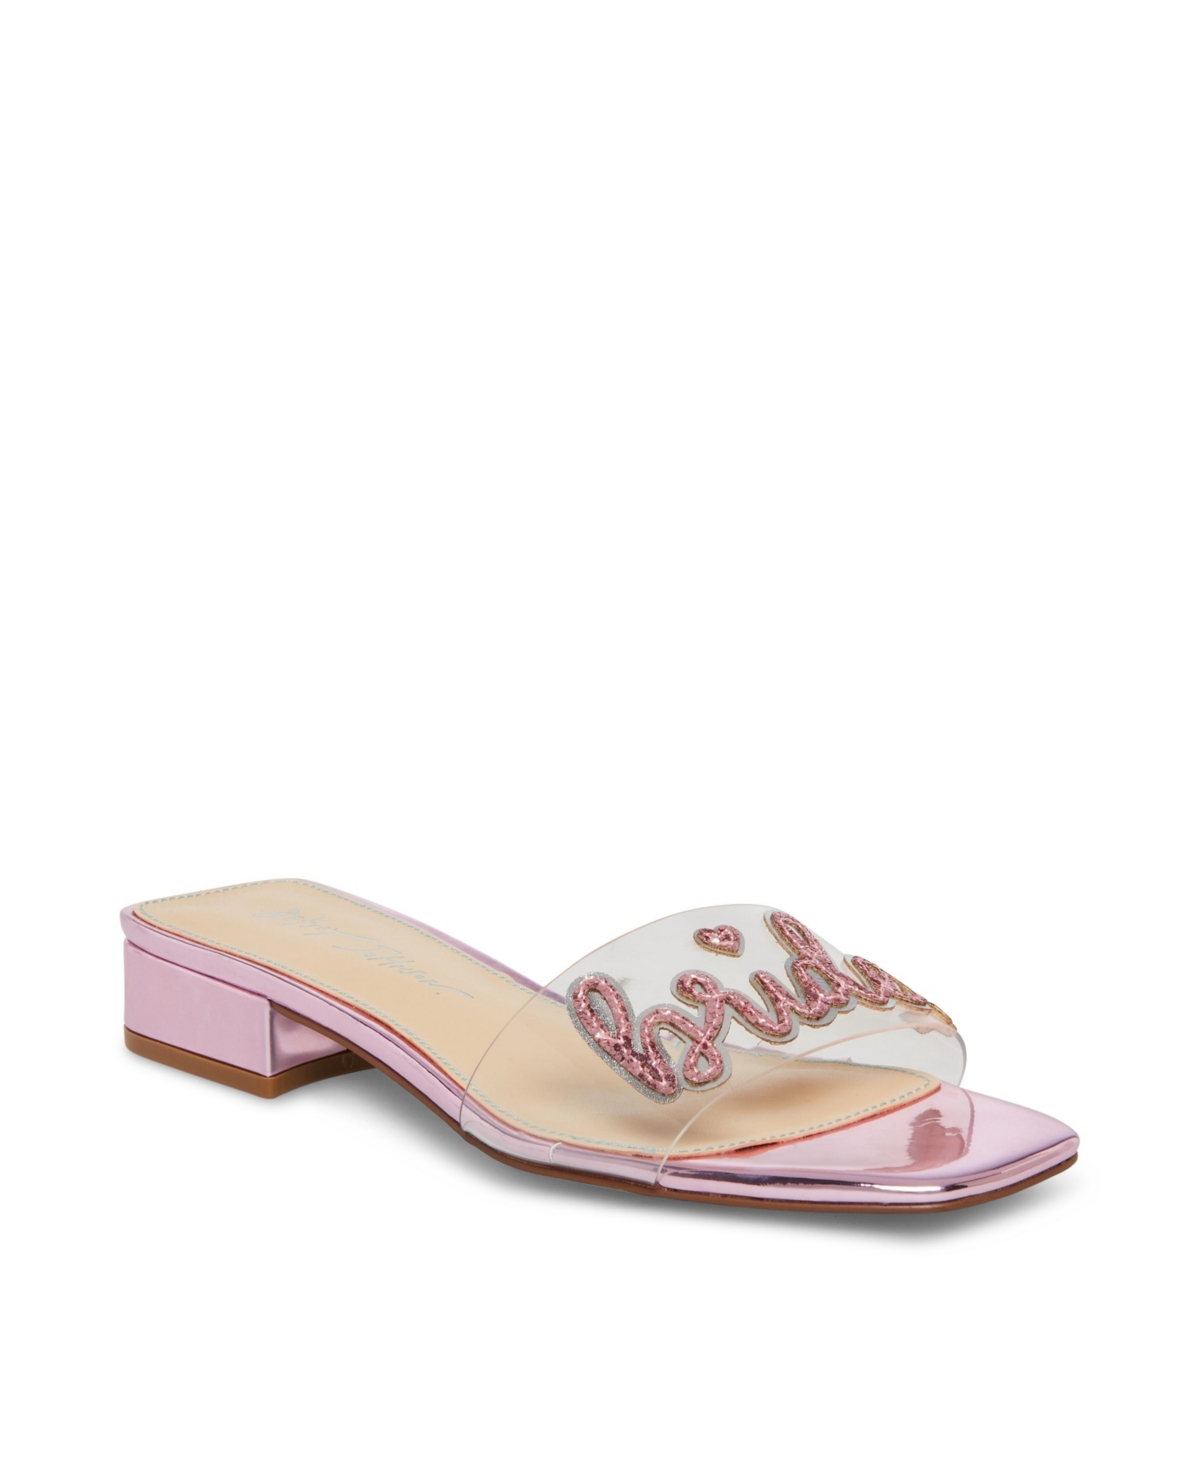 Women's Mint "Bridesmaid" Slide Sandals - Pink